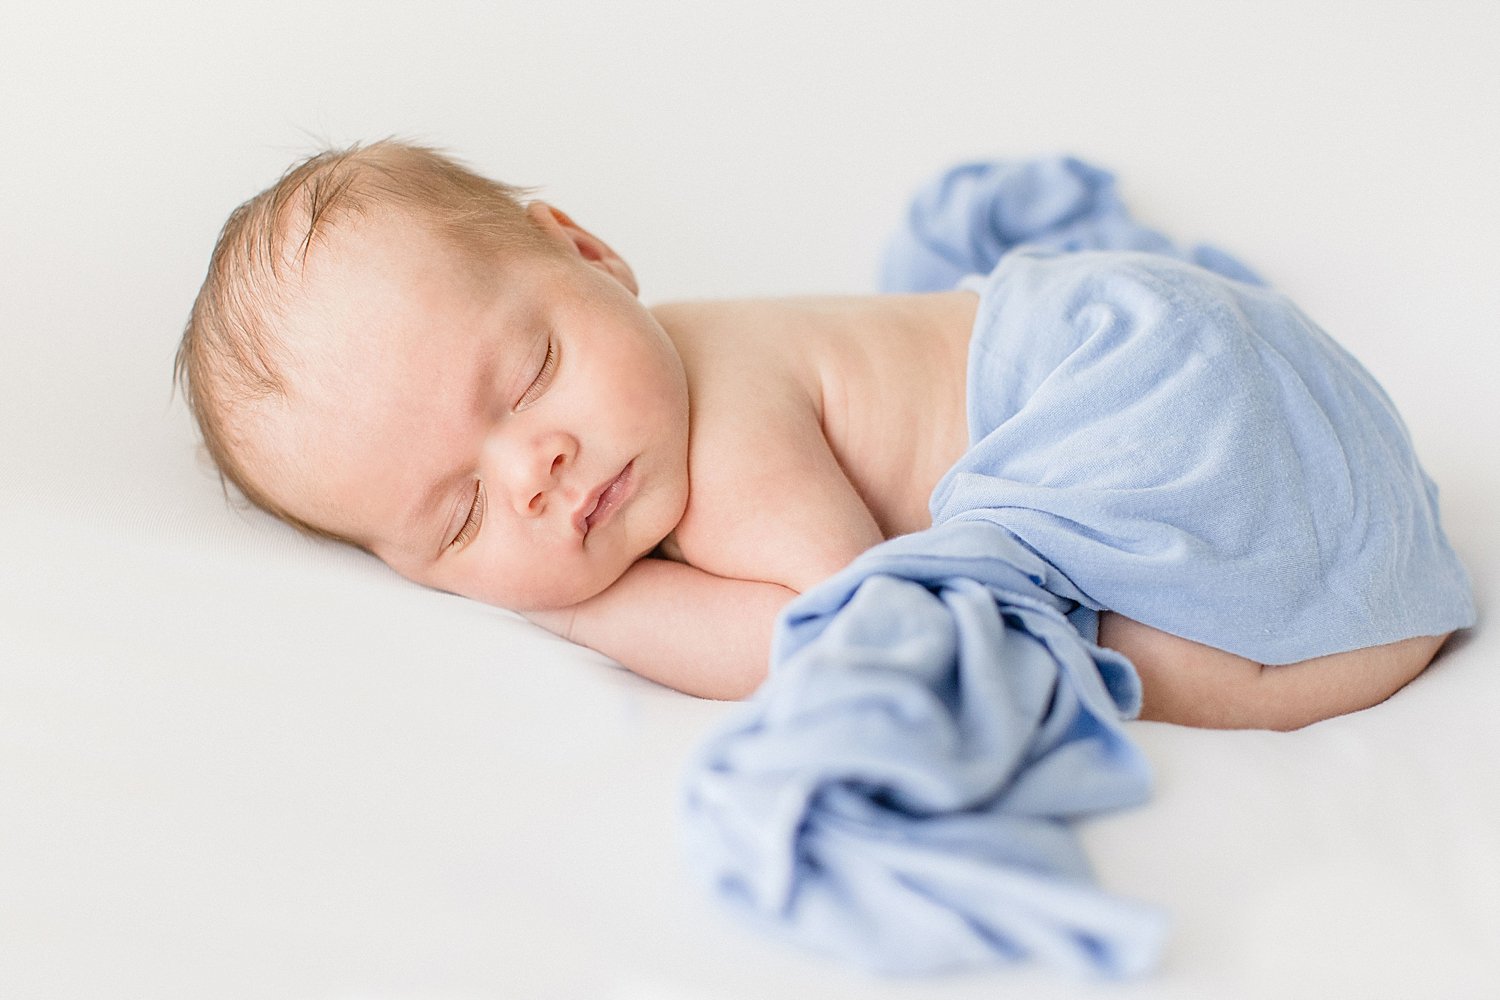 Studio newborn session for baby boy | Ambre Williams Photography